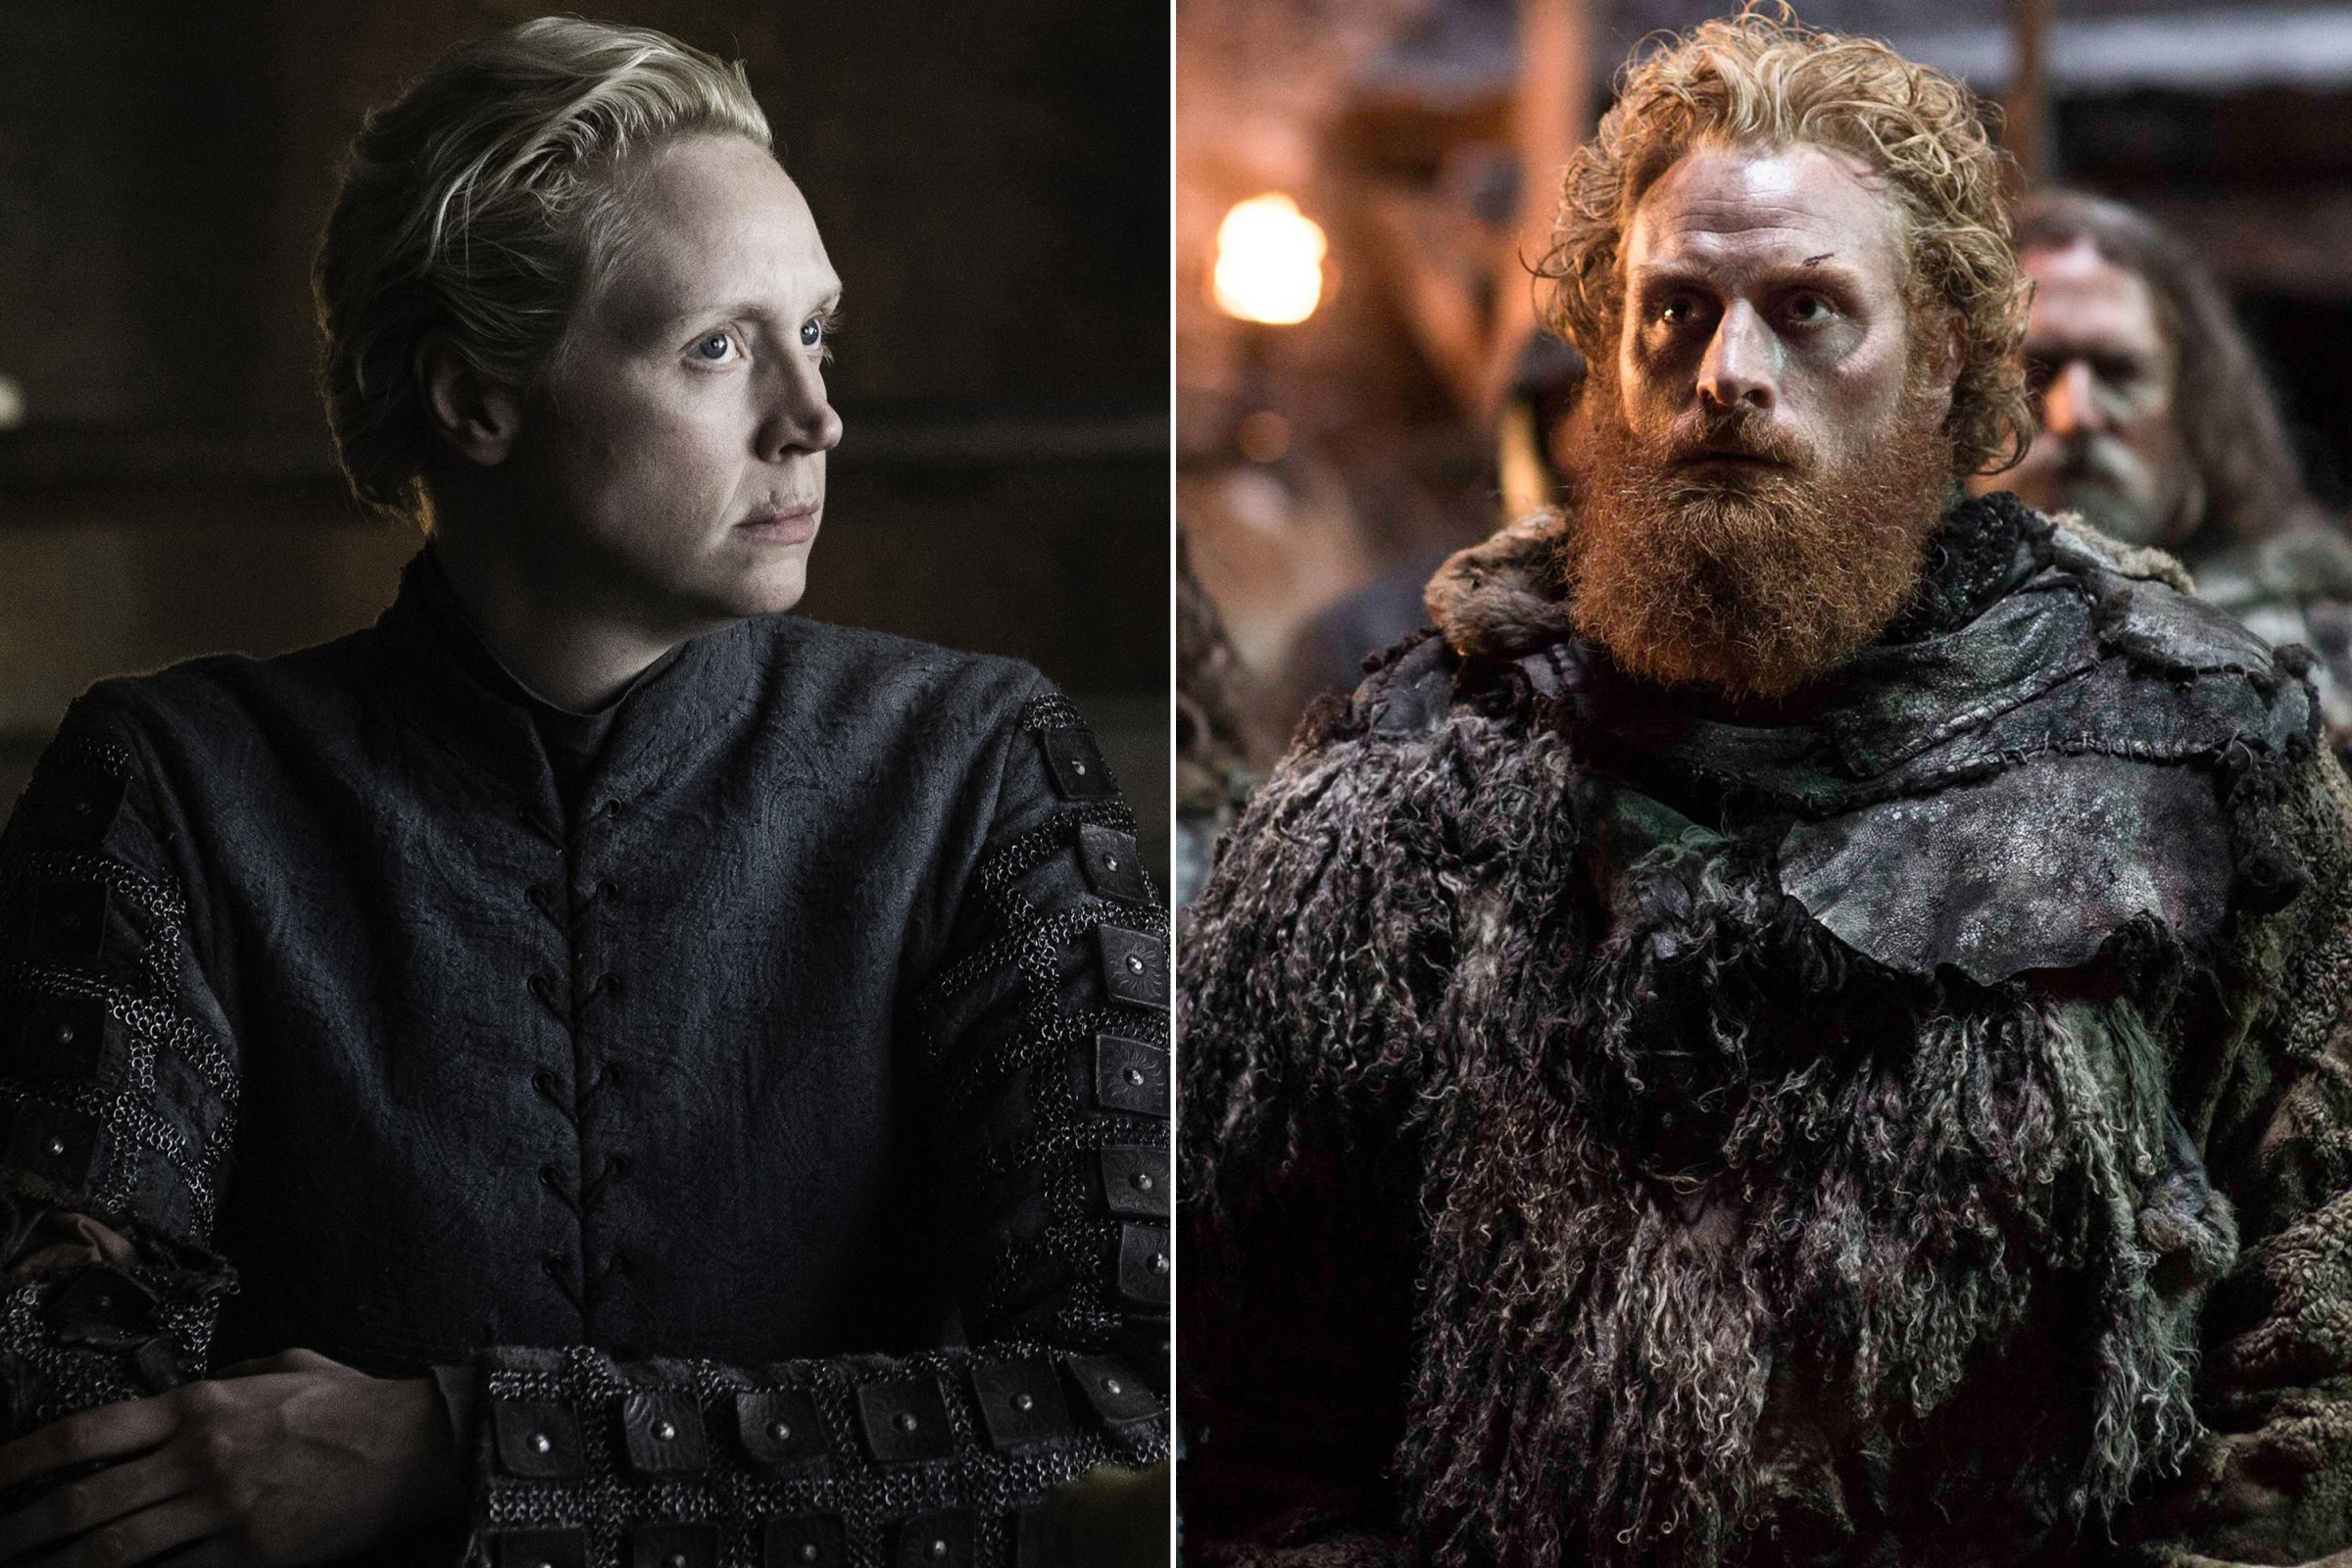 Kristofer Hivju as Tormund Giantsbane and Gwendoline Christie as Brienne of Tarth in Game of Thrones.